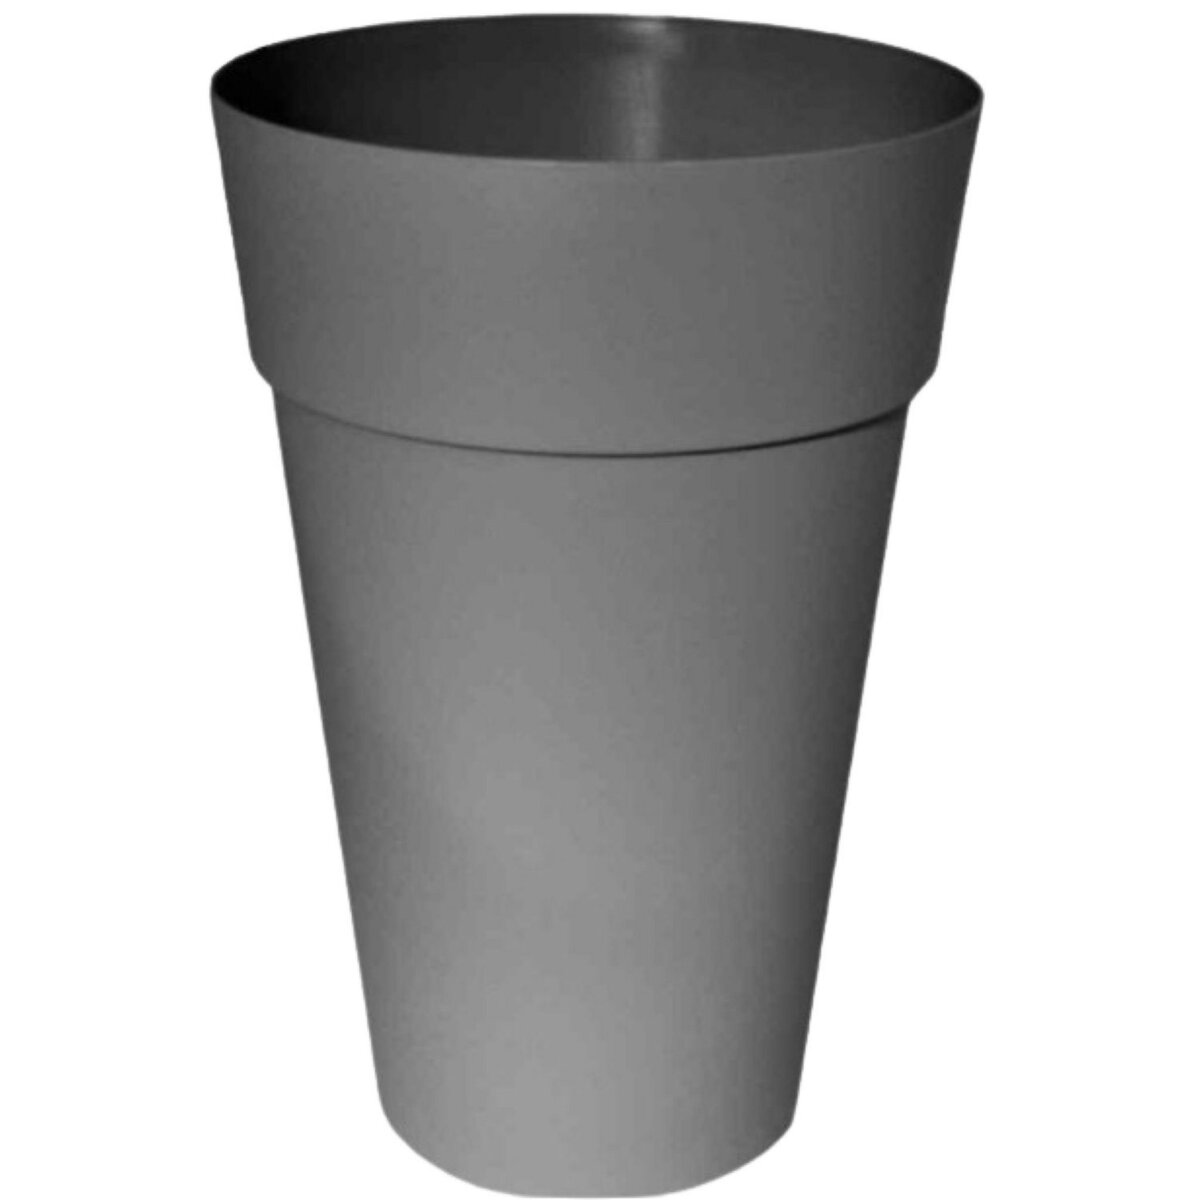 GARDENSTAR Pot en plastique ICFAL - D35H51cm - SMOKE